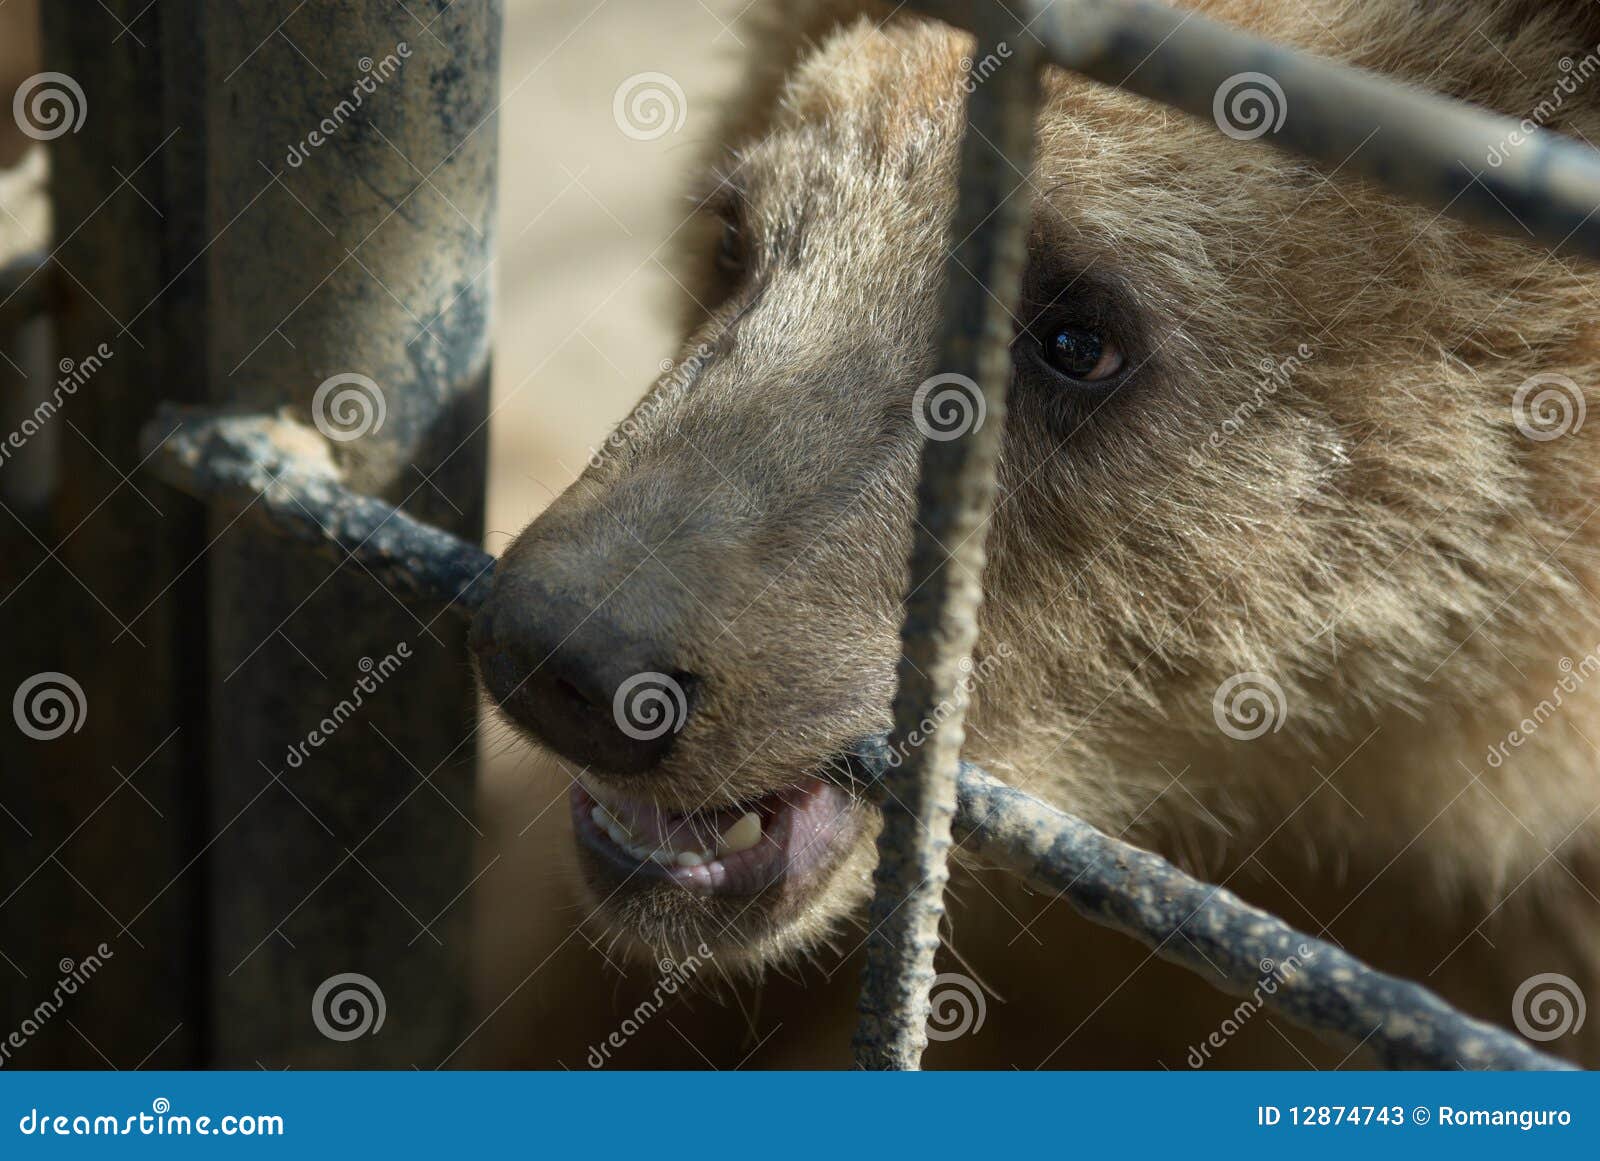 brown bear in captivity